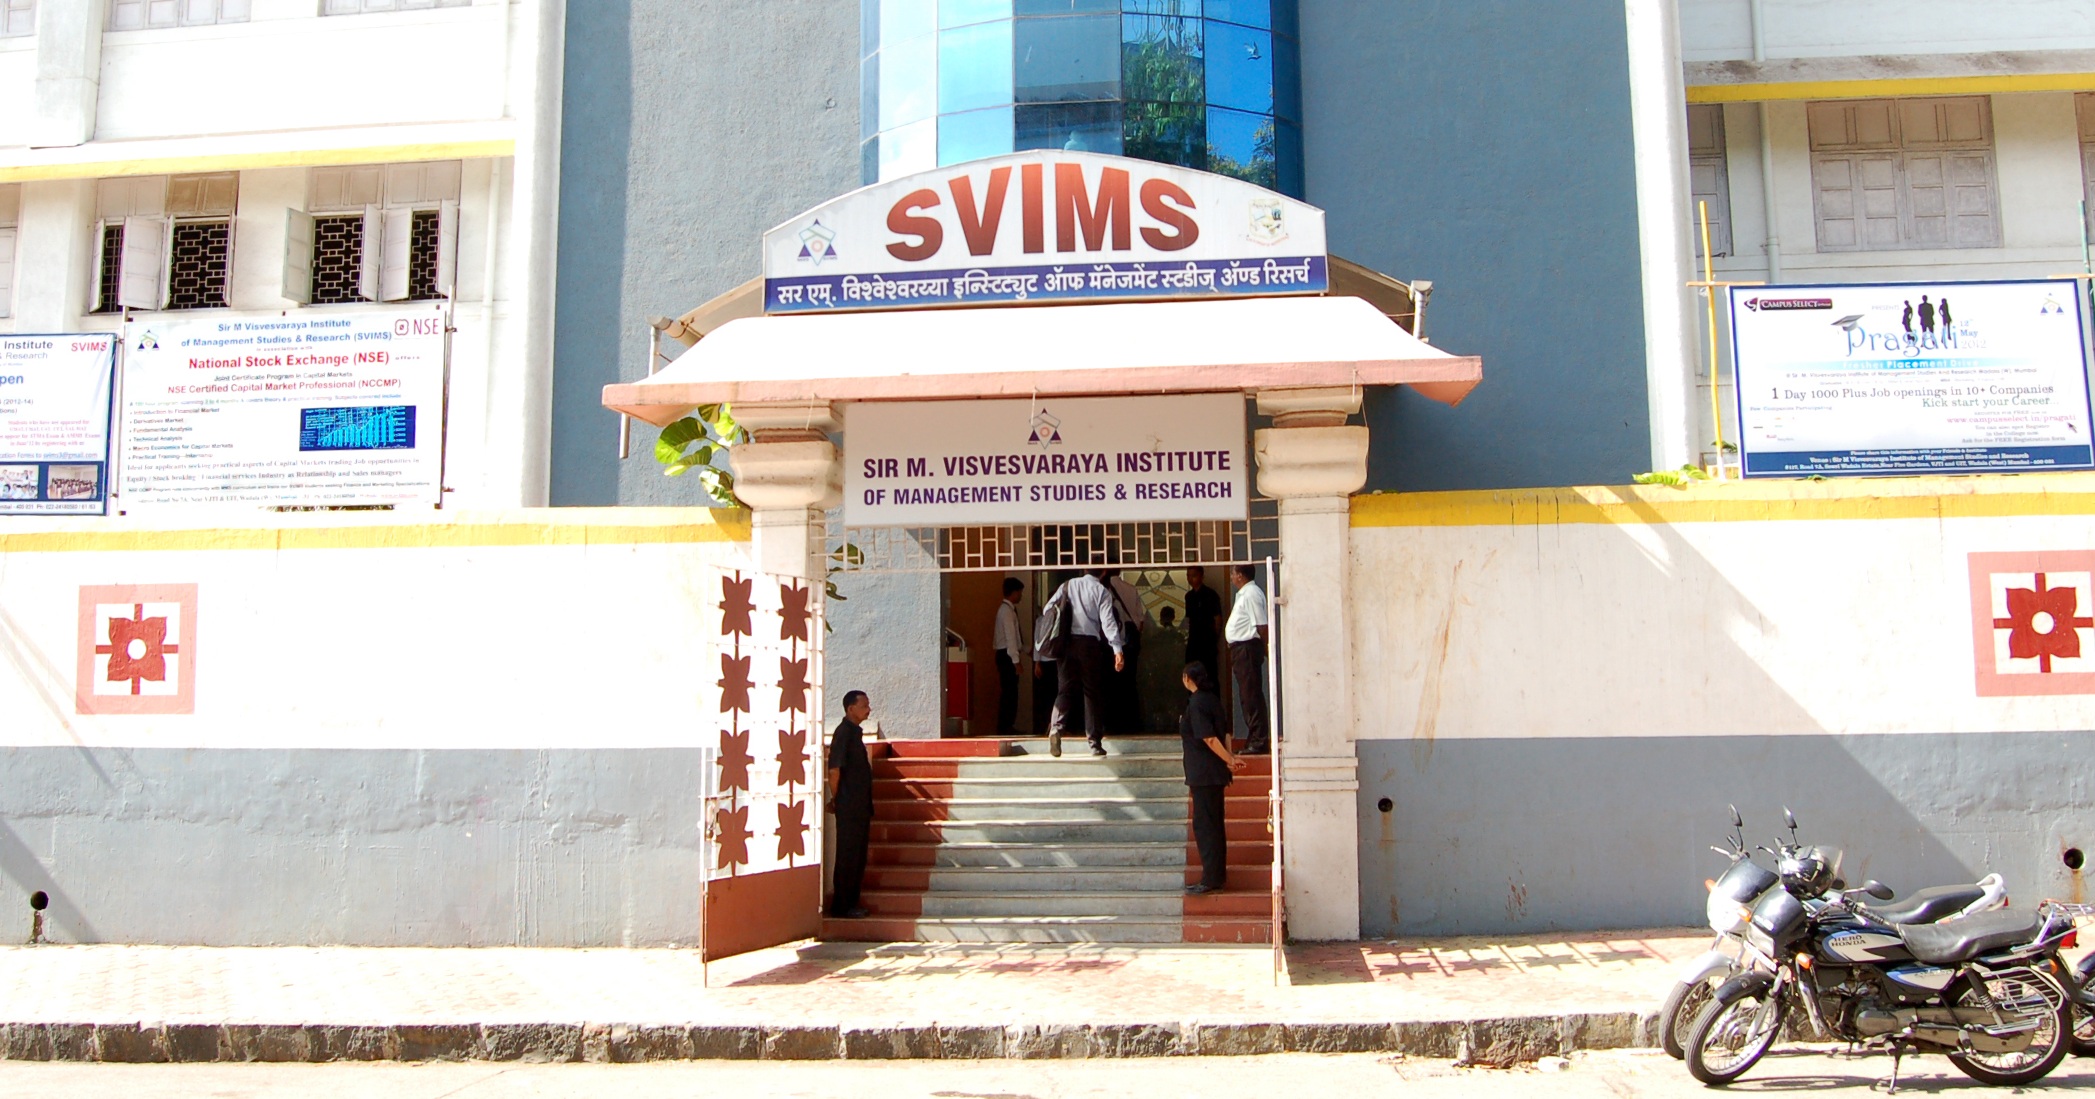 Sir M. Visvesvarya Institute of Management Studies and Research, Mumbai Image